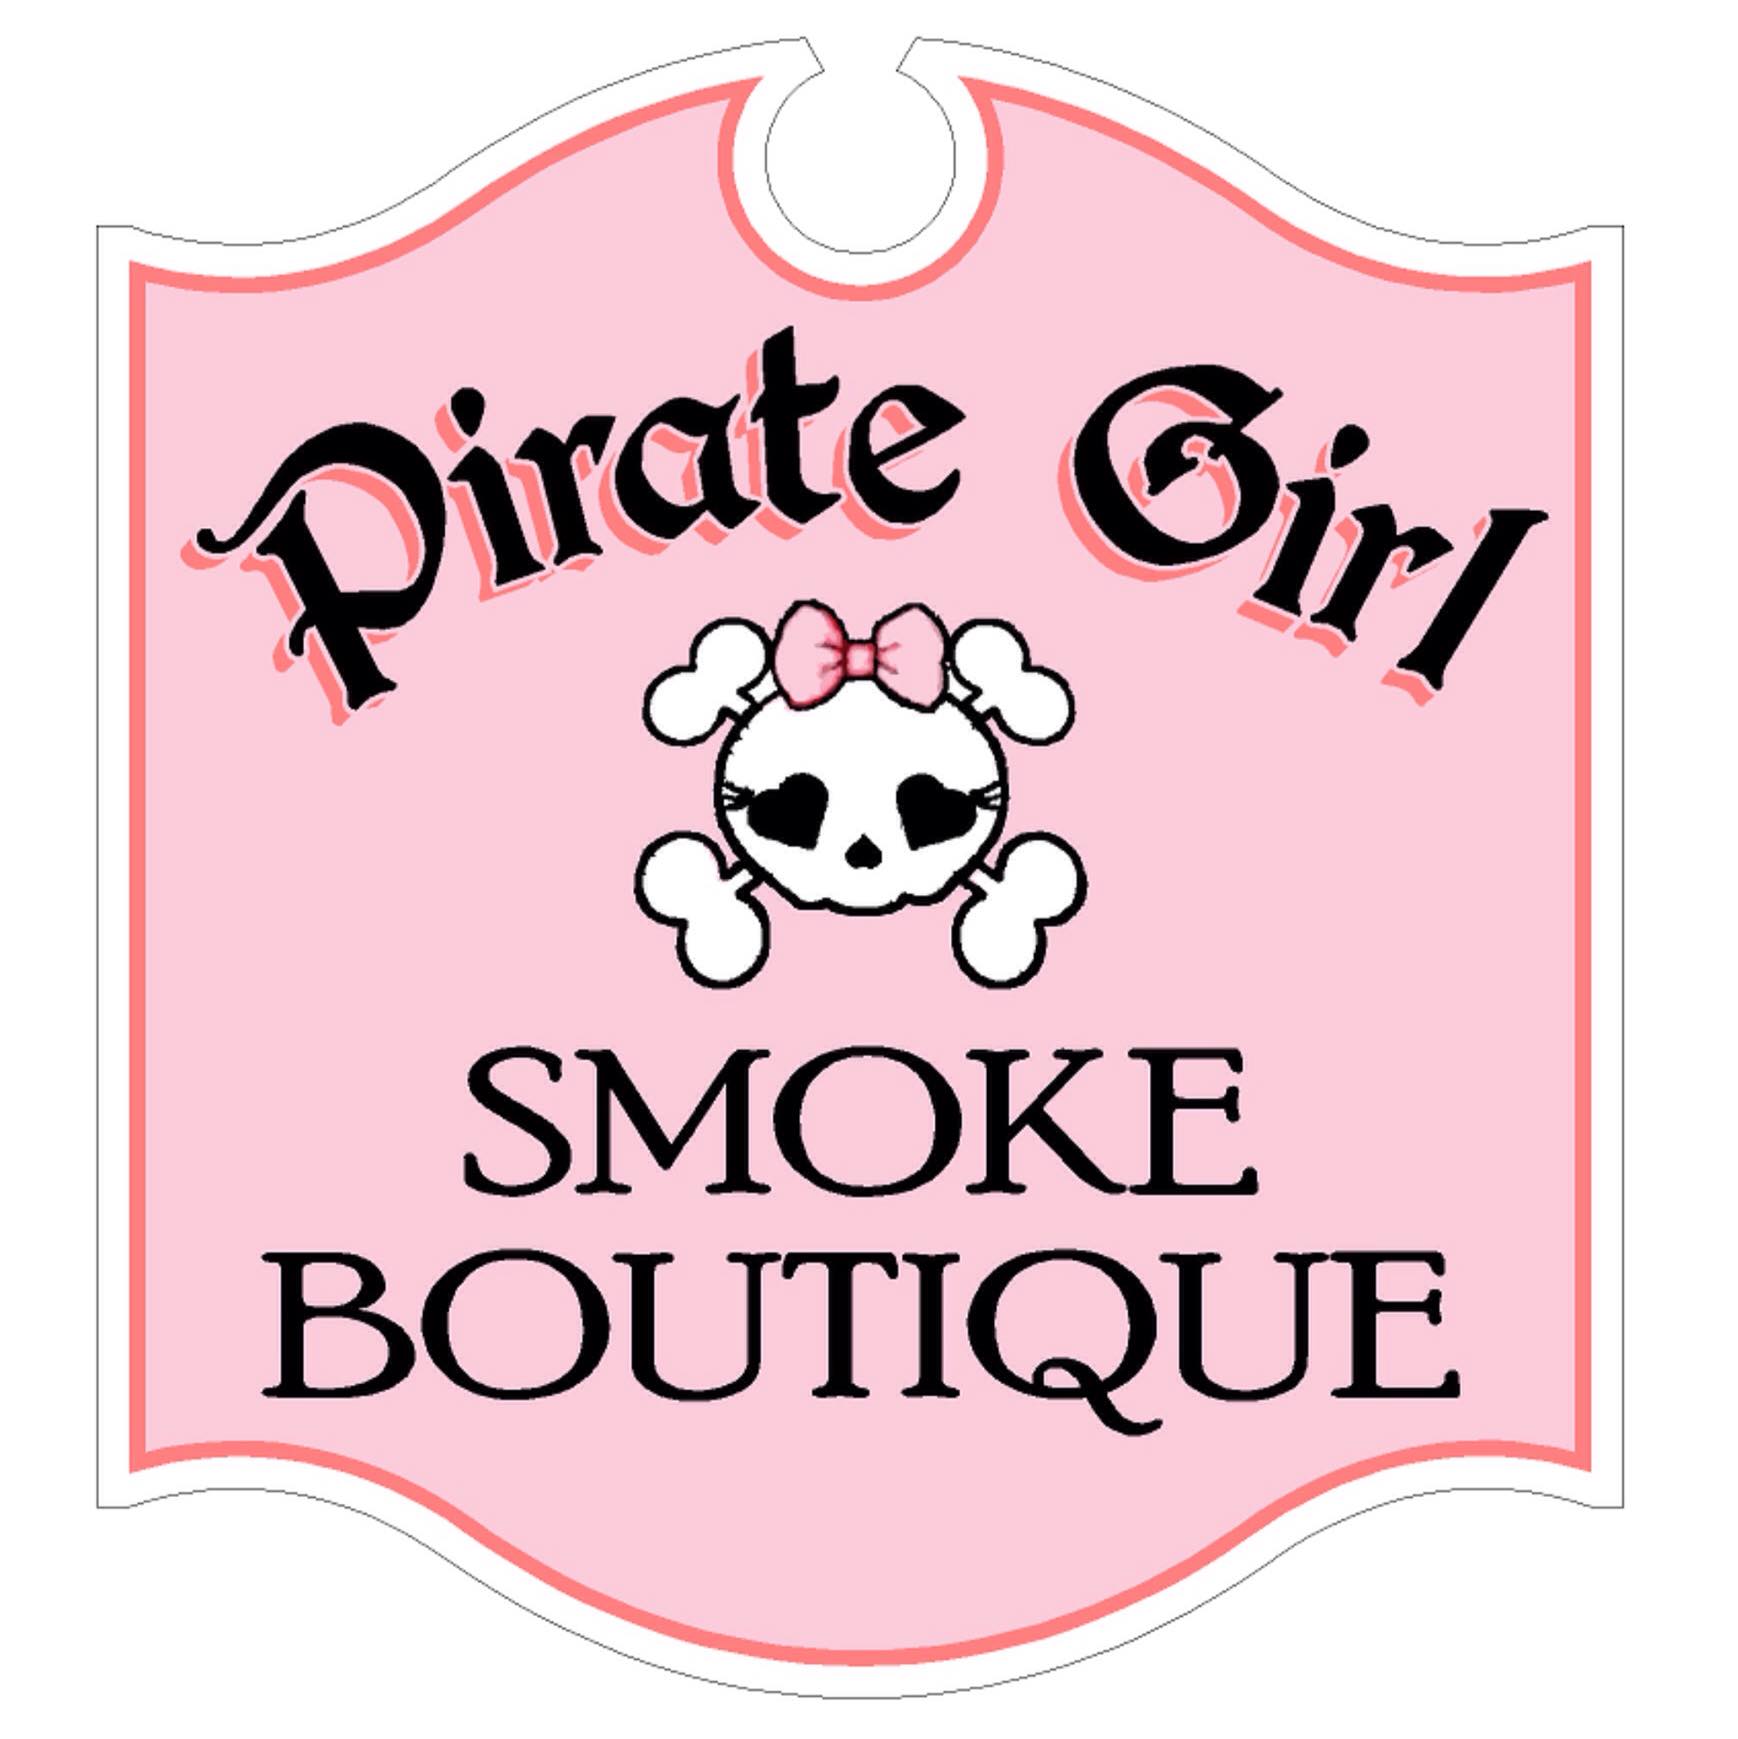 Silicone Nectar Collector Kit – Pirate Girl Smoke Boutique